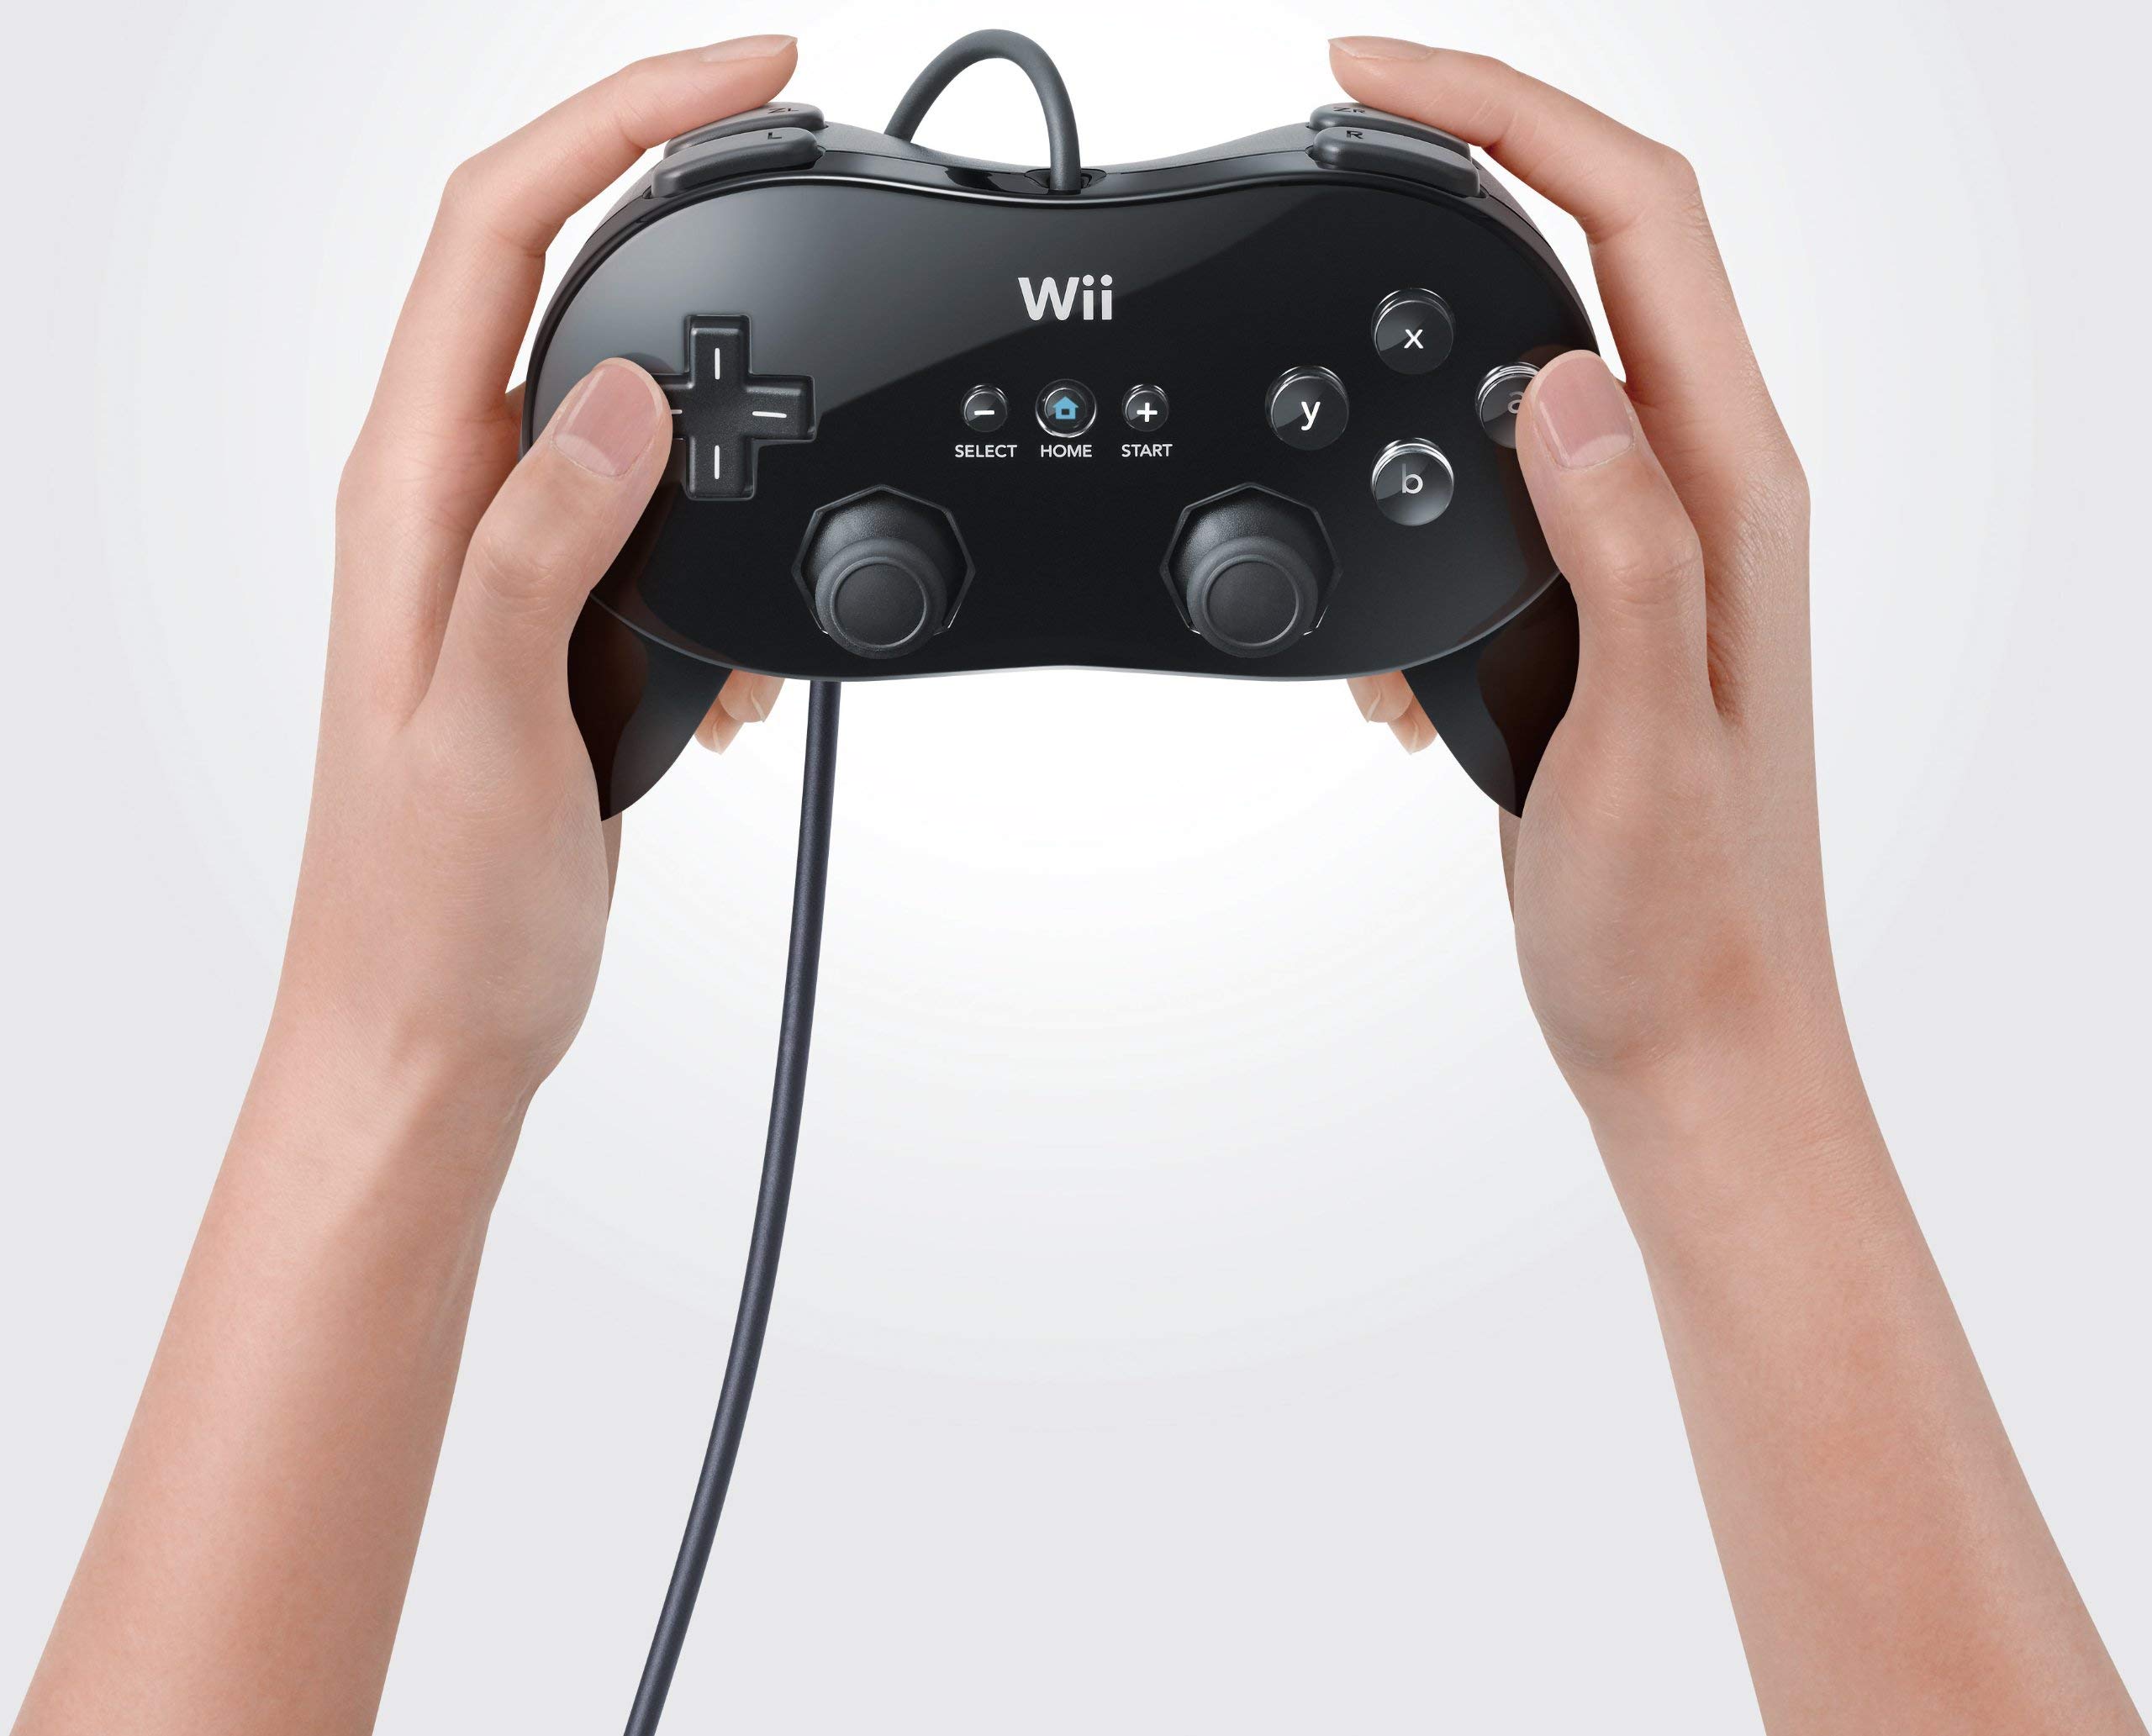 TAY PRO CONTROLLER CHO MÁY WII TRÒ CHƠI WII TAY CẦM MẦU ĐEN Wii Classic Controller Pro - Black